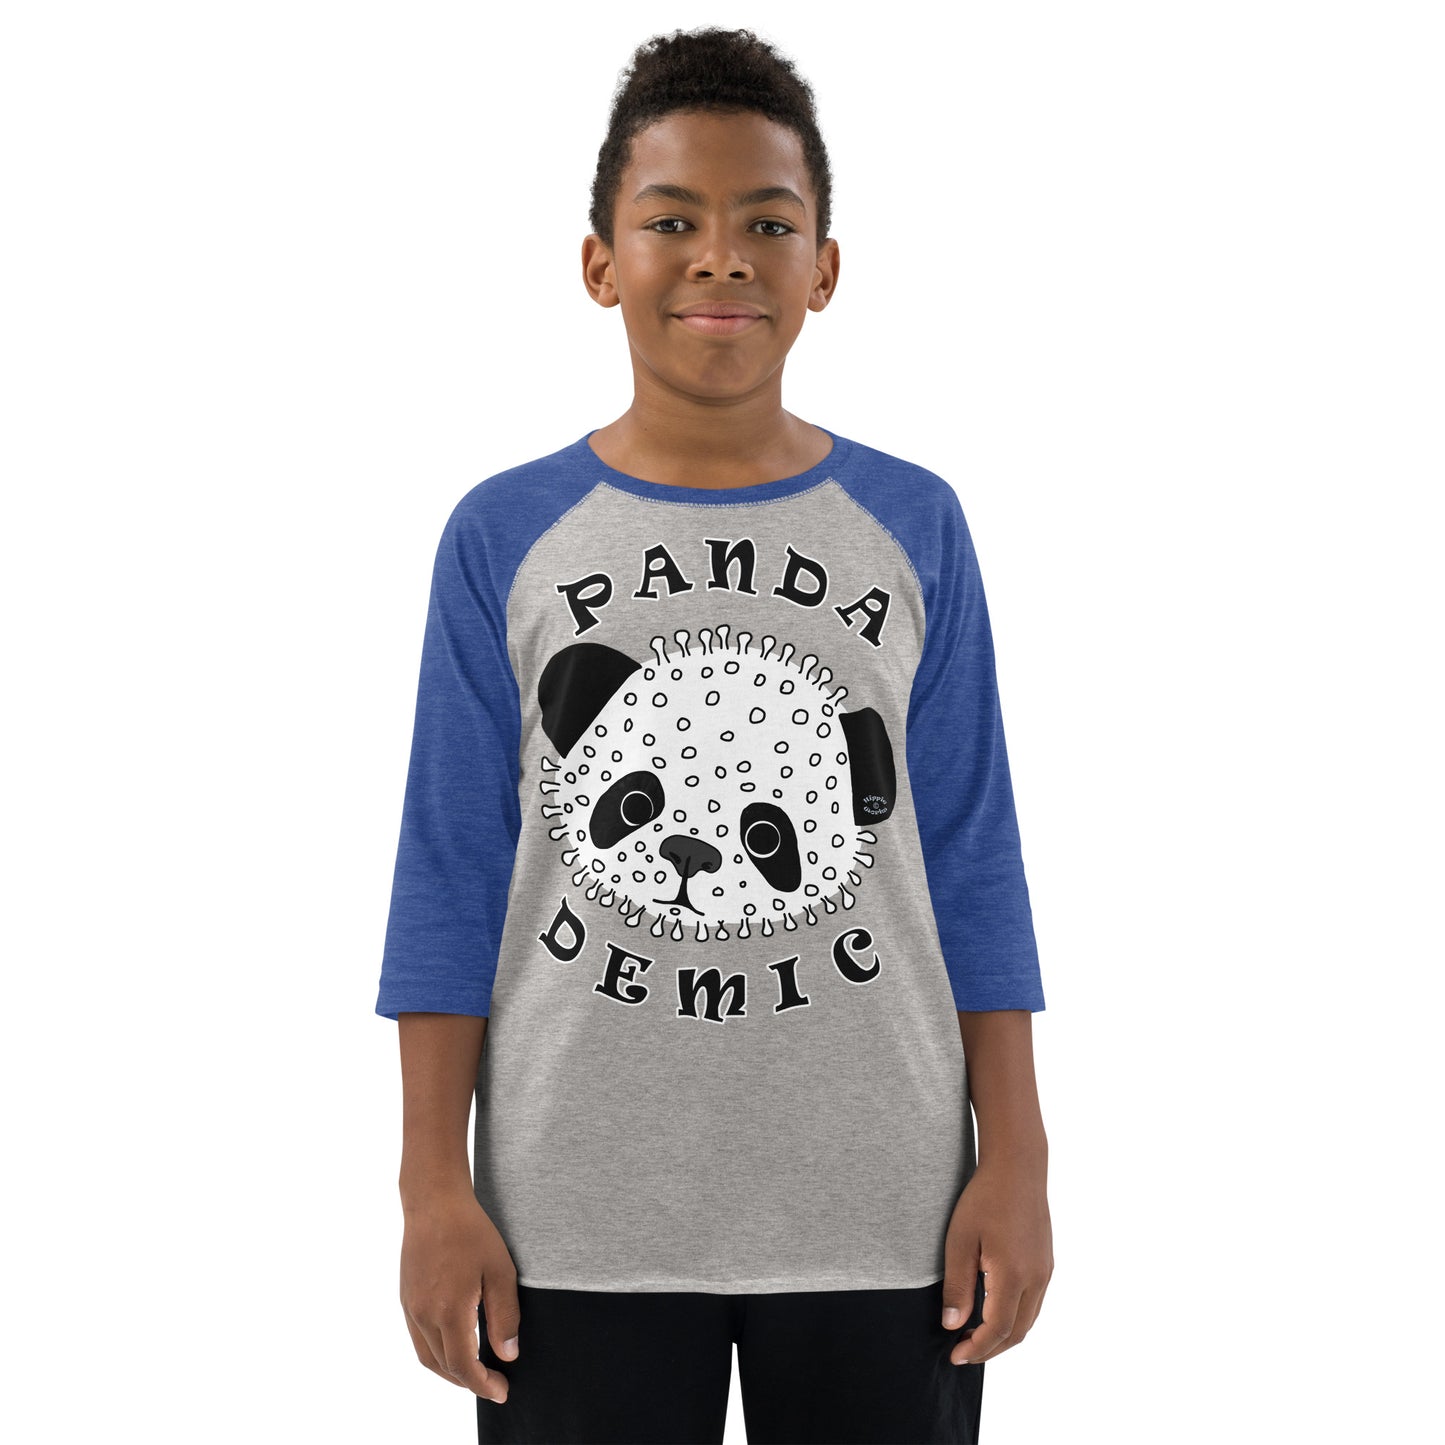 "Panda-Demic" Youth Baseball Shirt